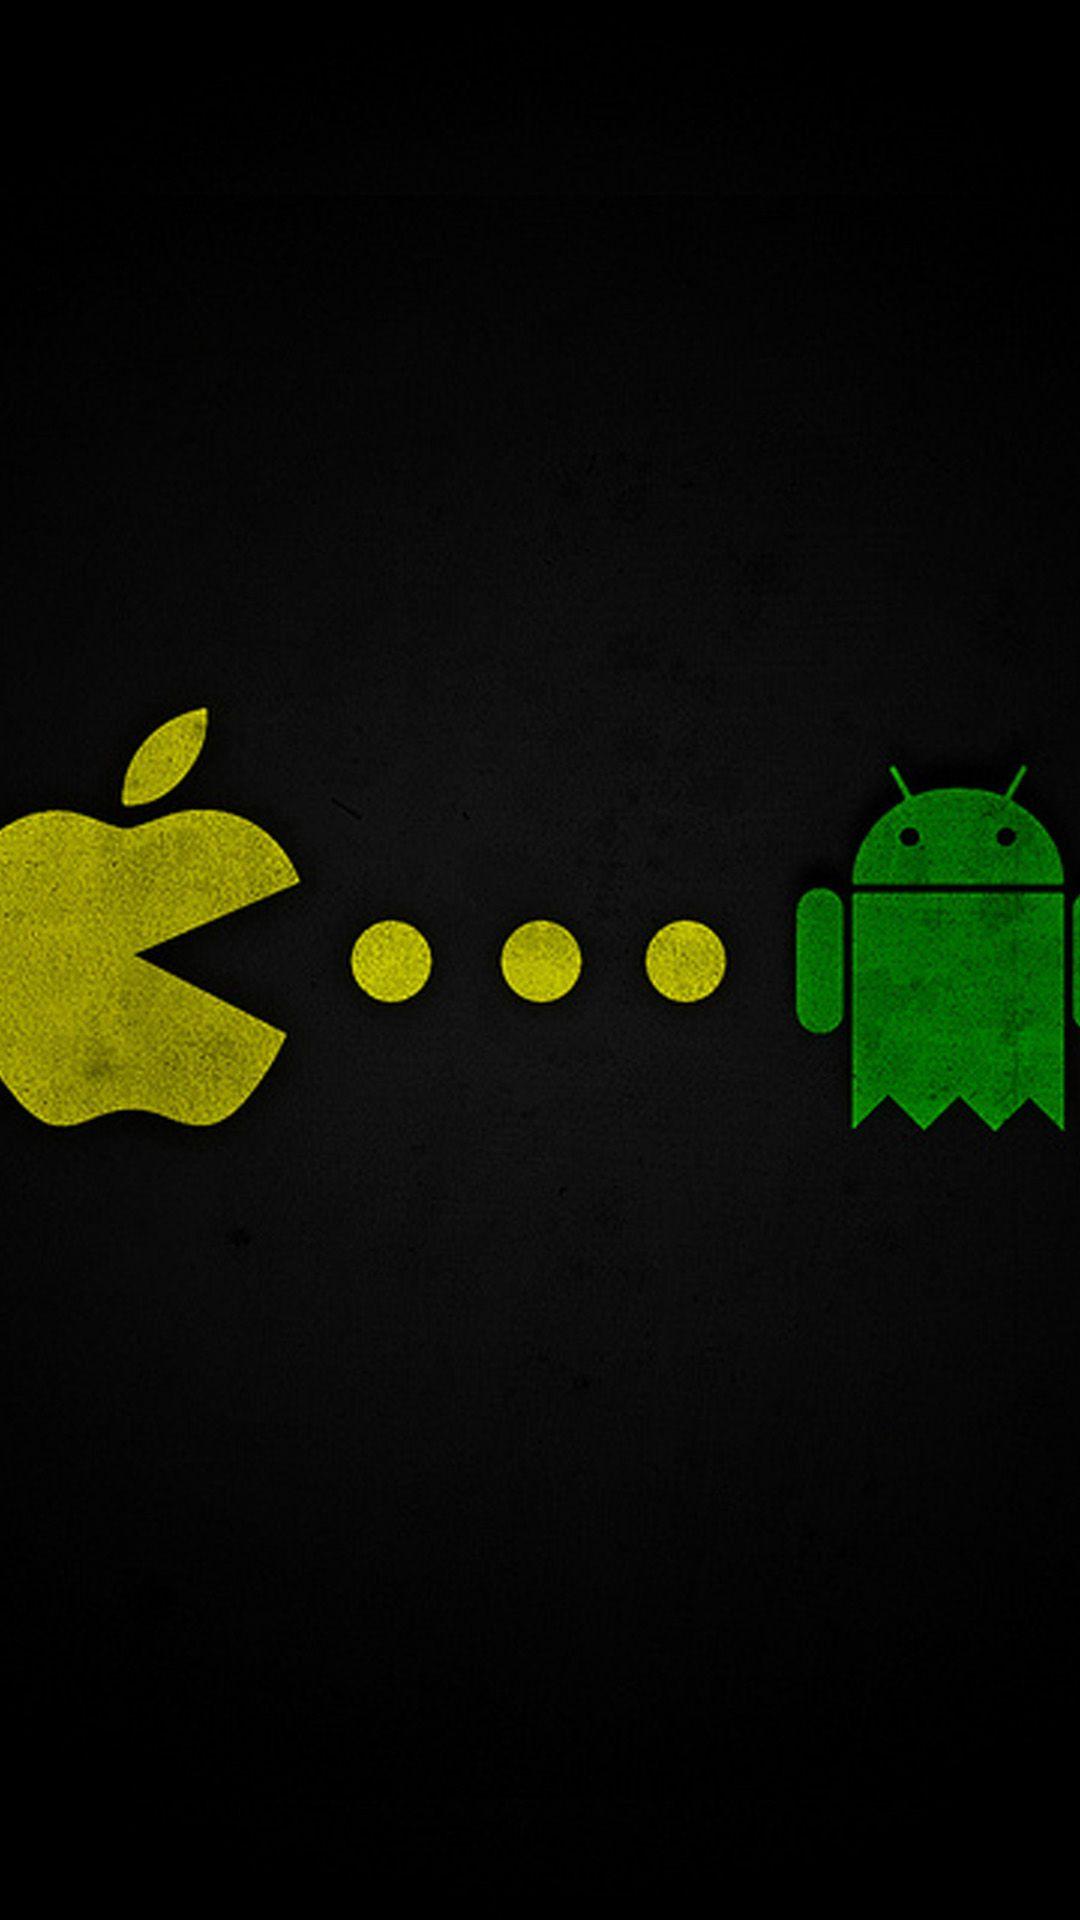 Android Vs Apple Wallpaper HD